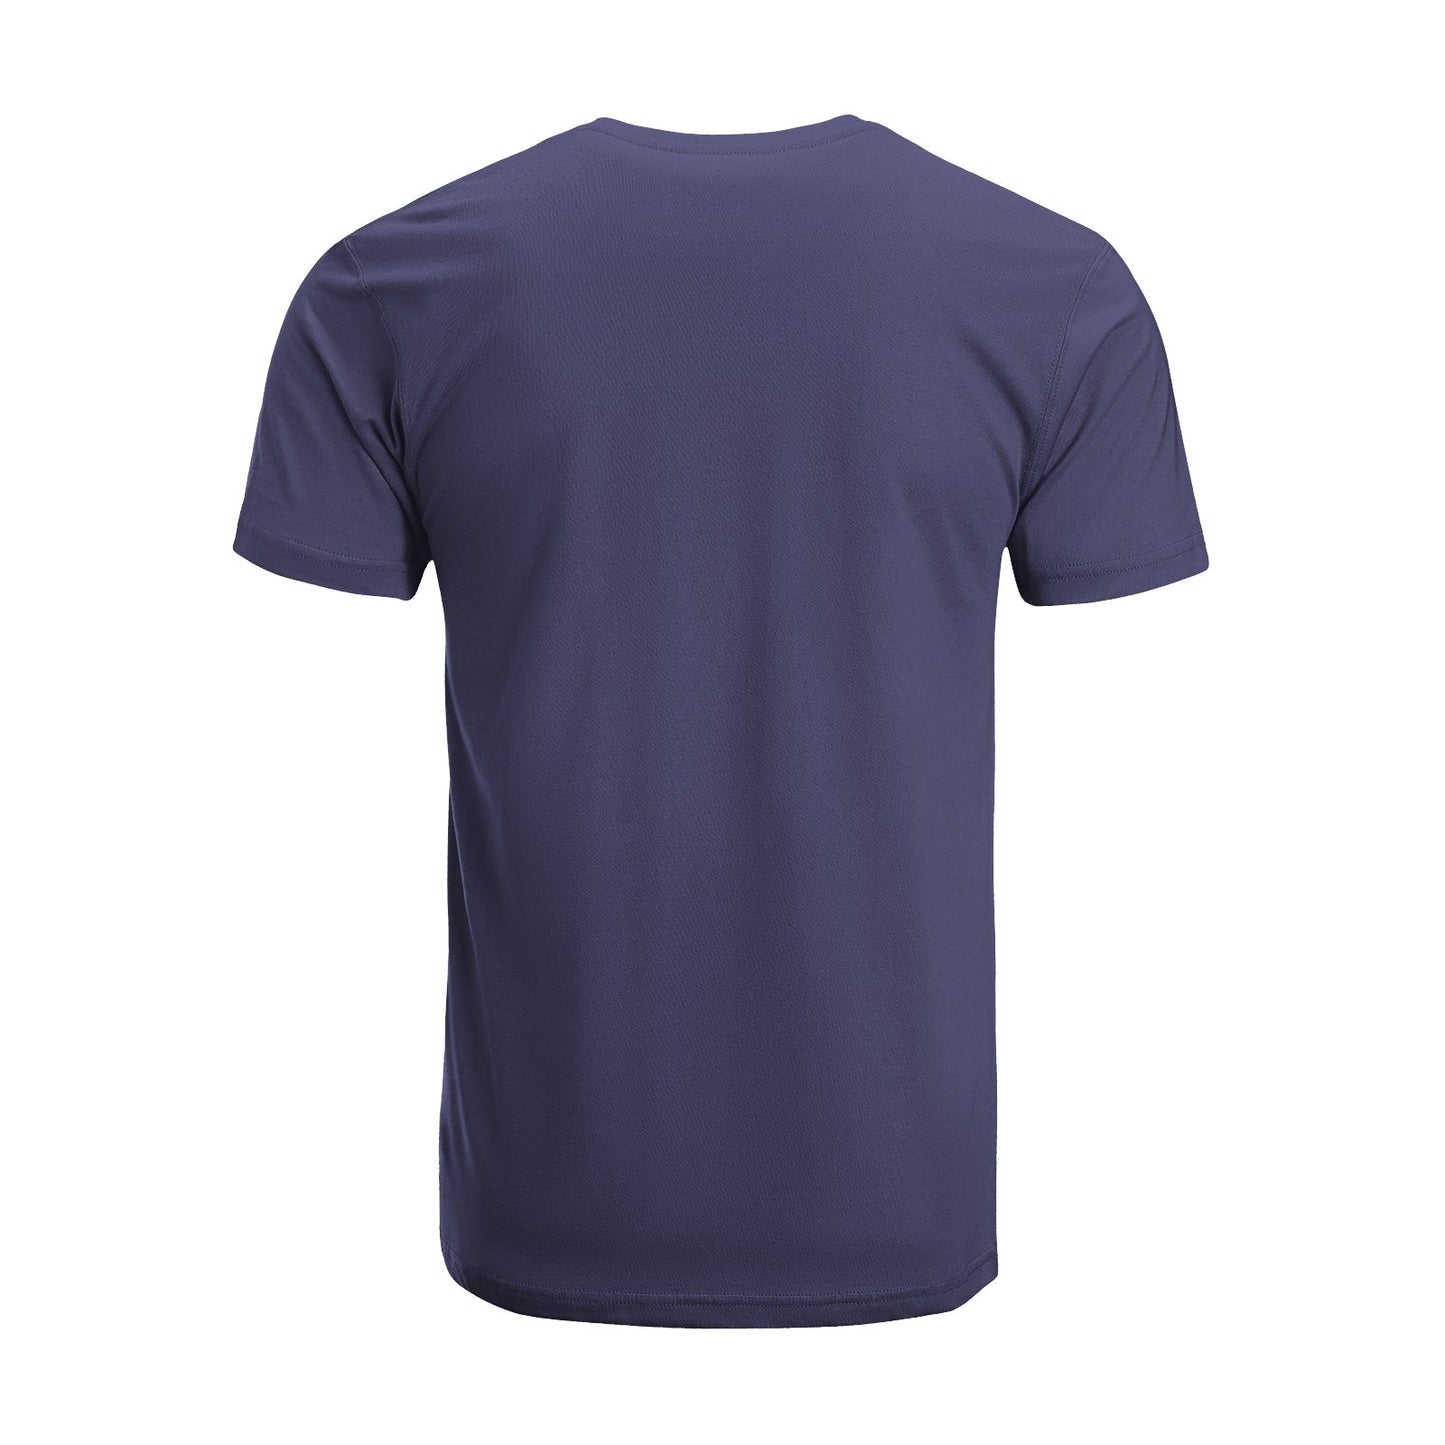 Unisex Short Sleeve Crew Neck Cotton Jersey T-Shirt MOM 36